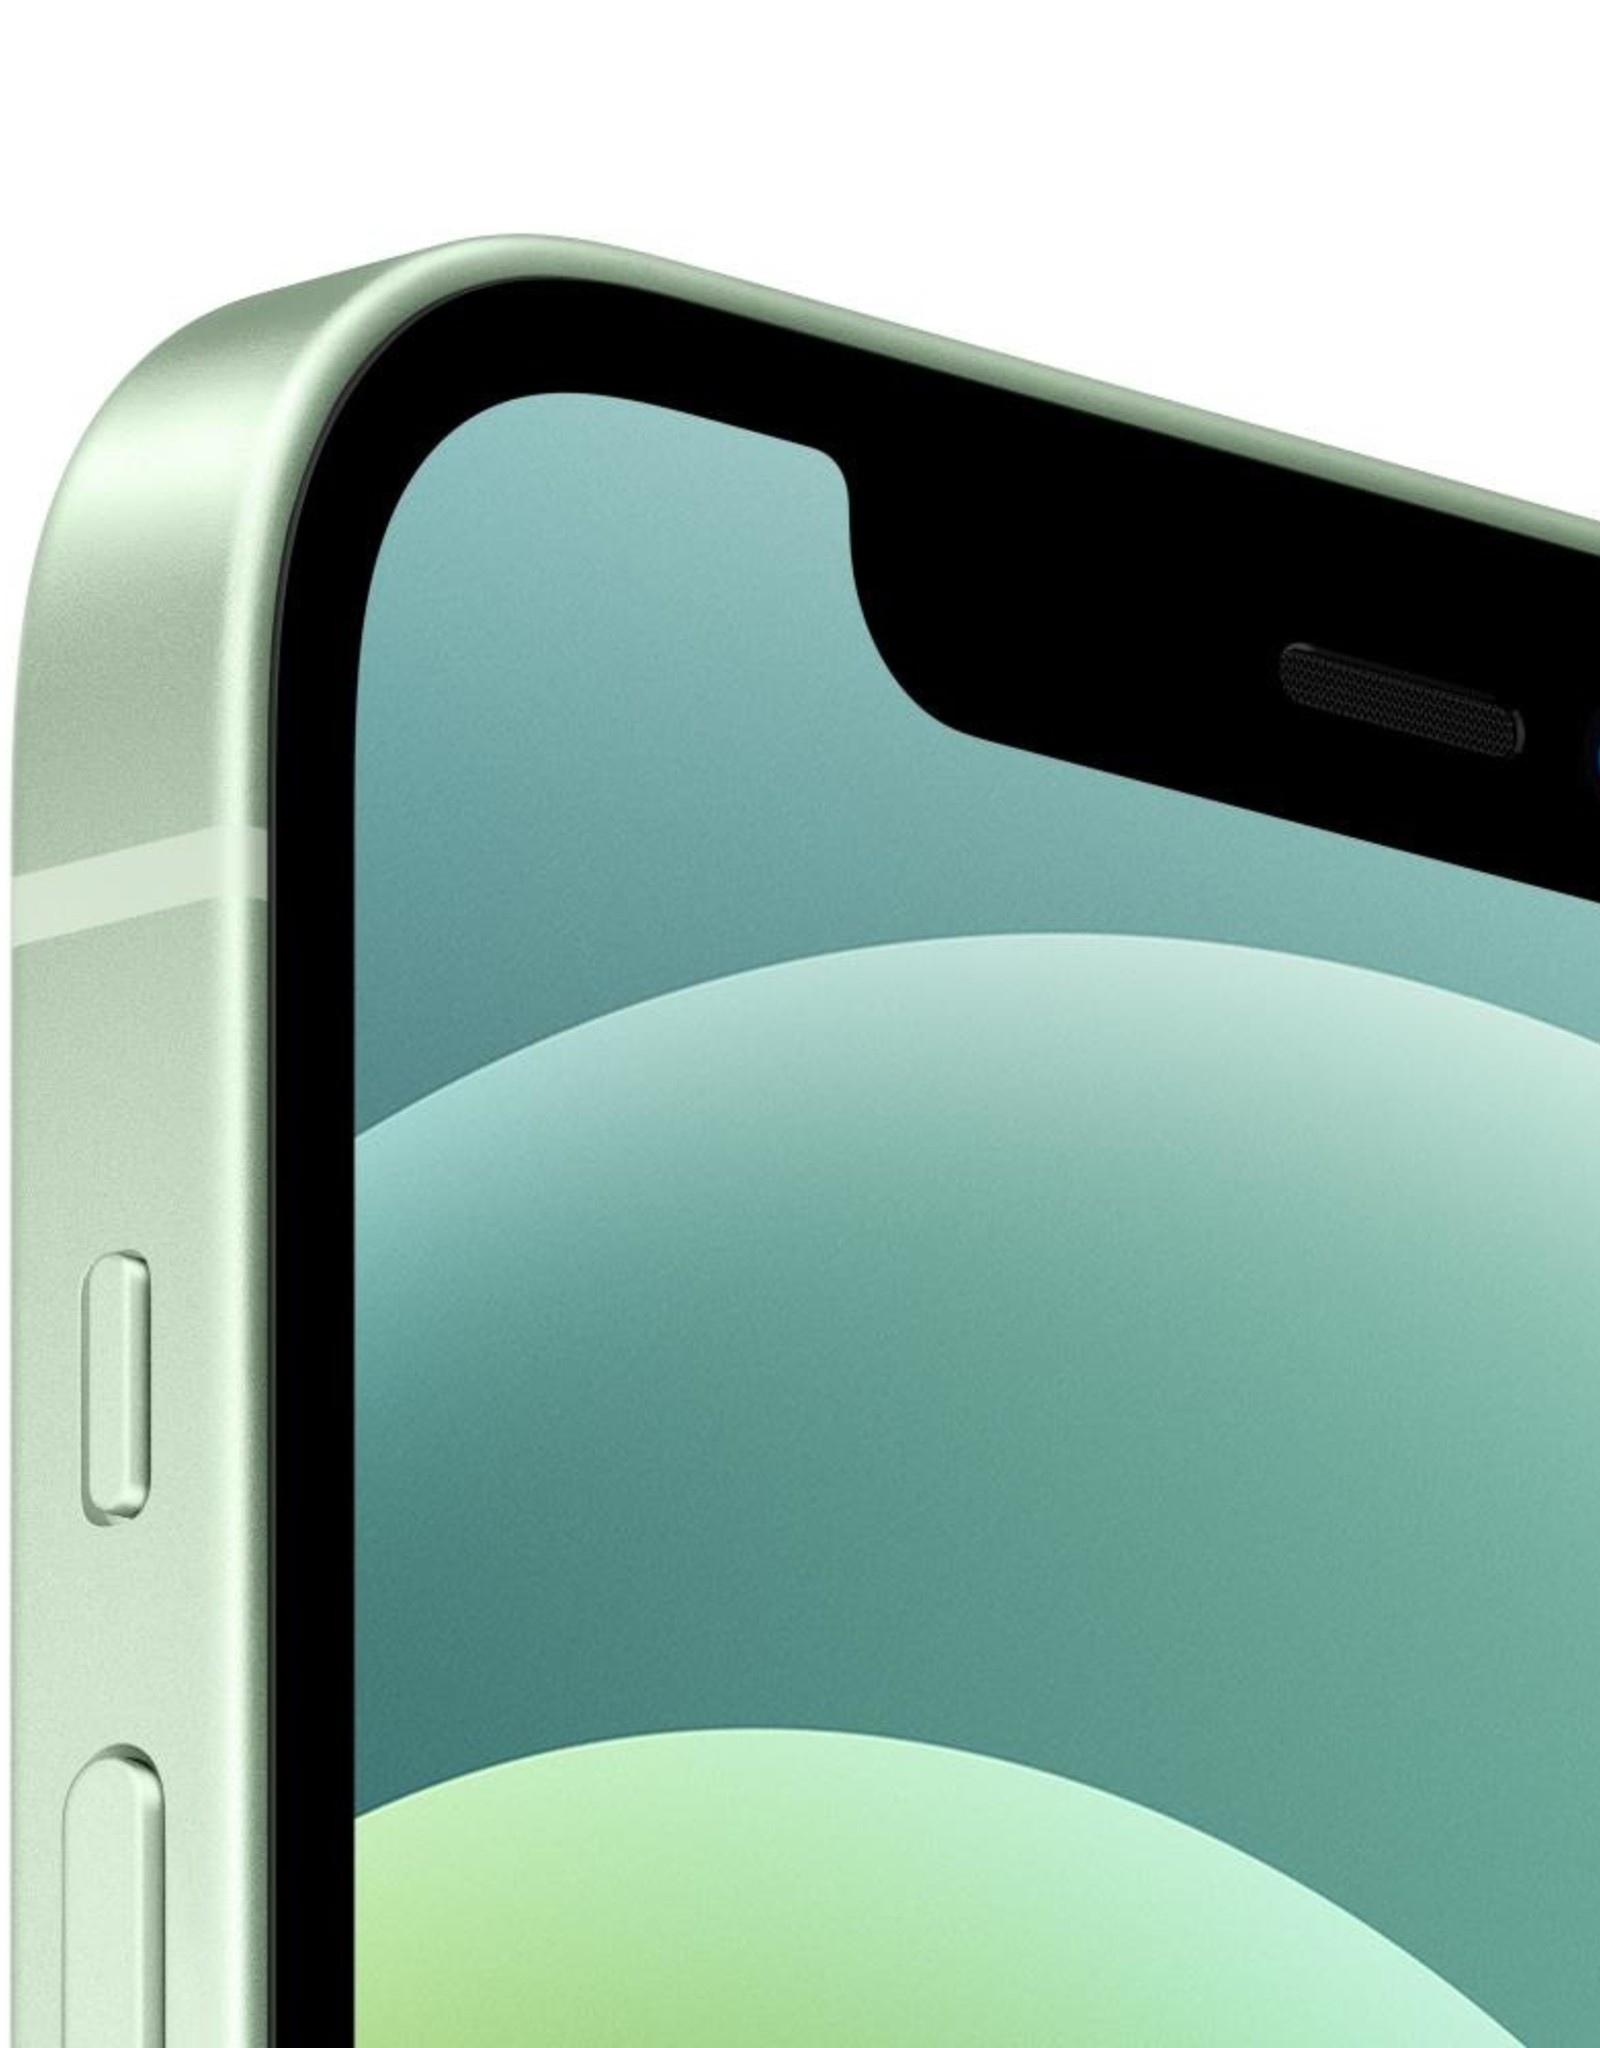 Apple iPhone 12 64GB Groen